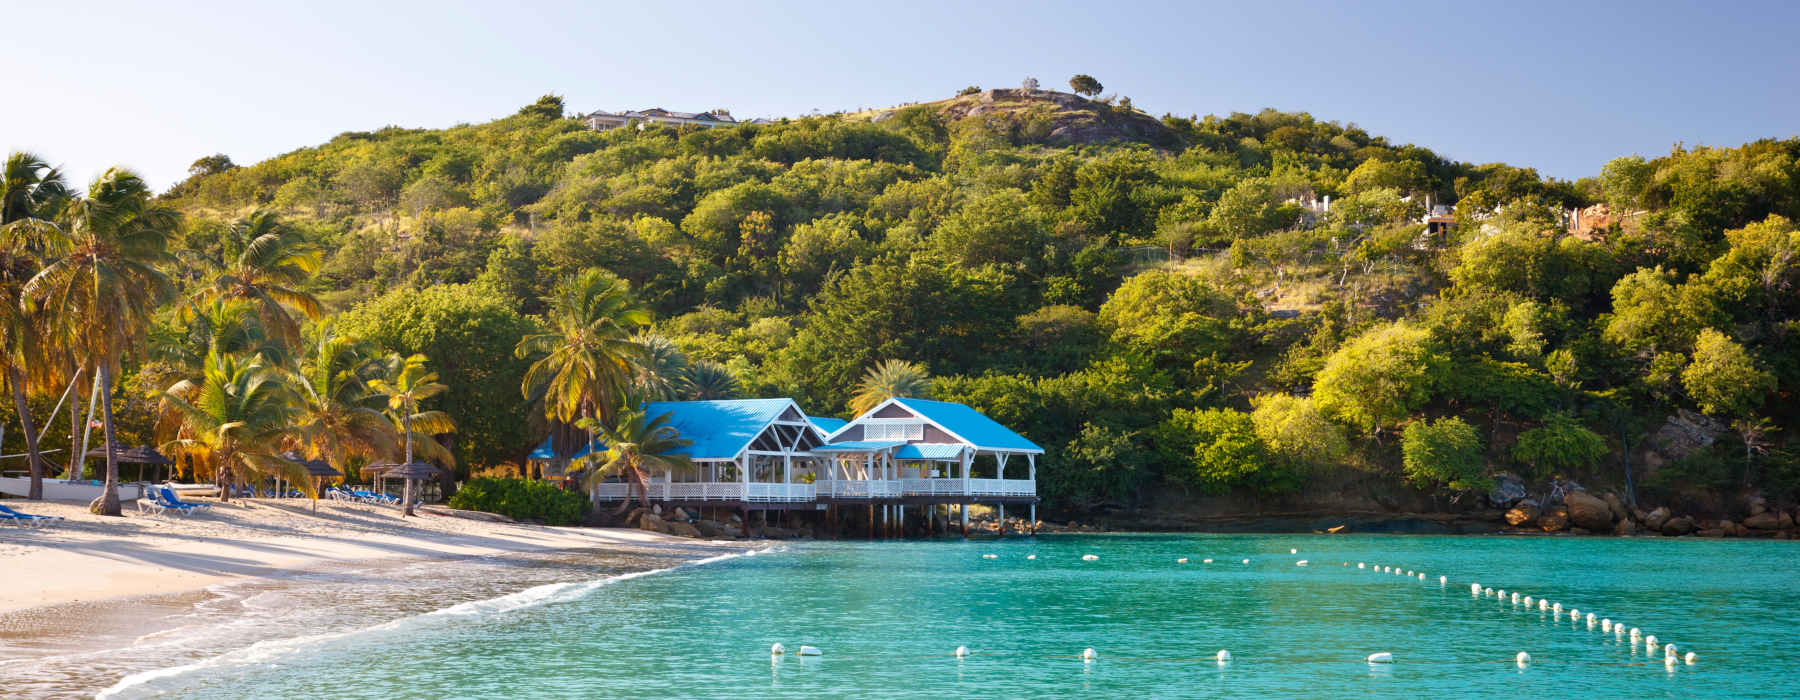 Antigua and Barbuda<br class="hidden-md hidden-lg" /> May Half Term